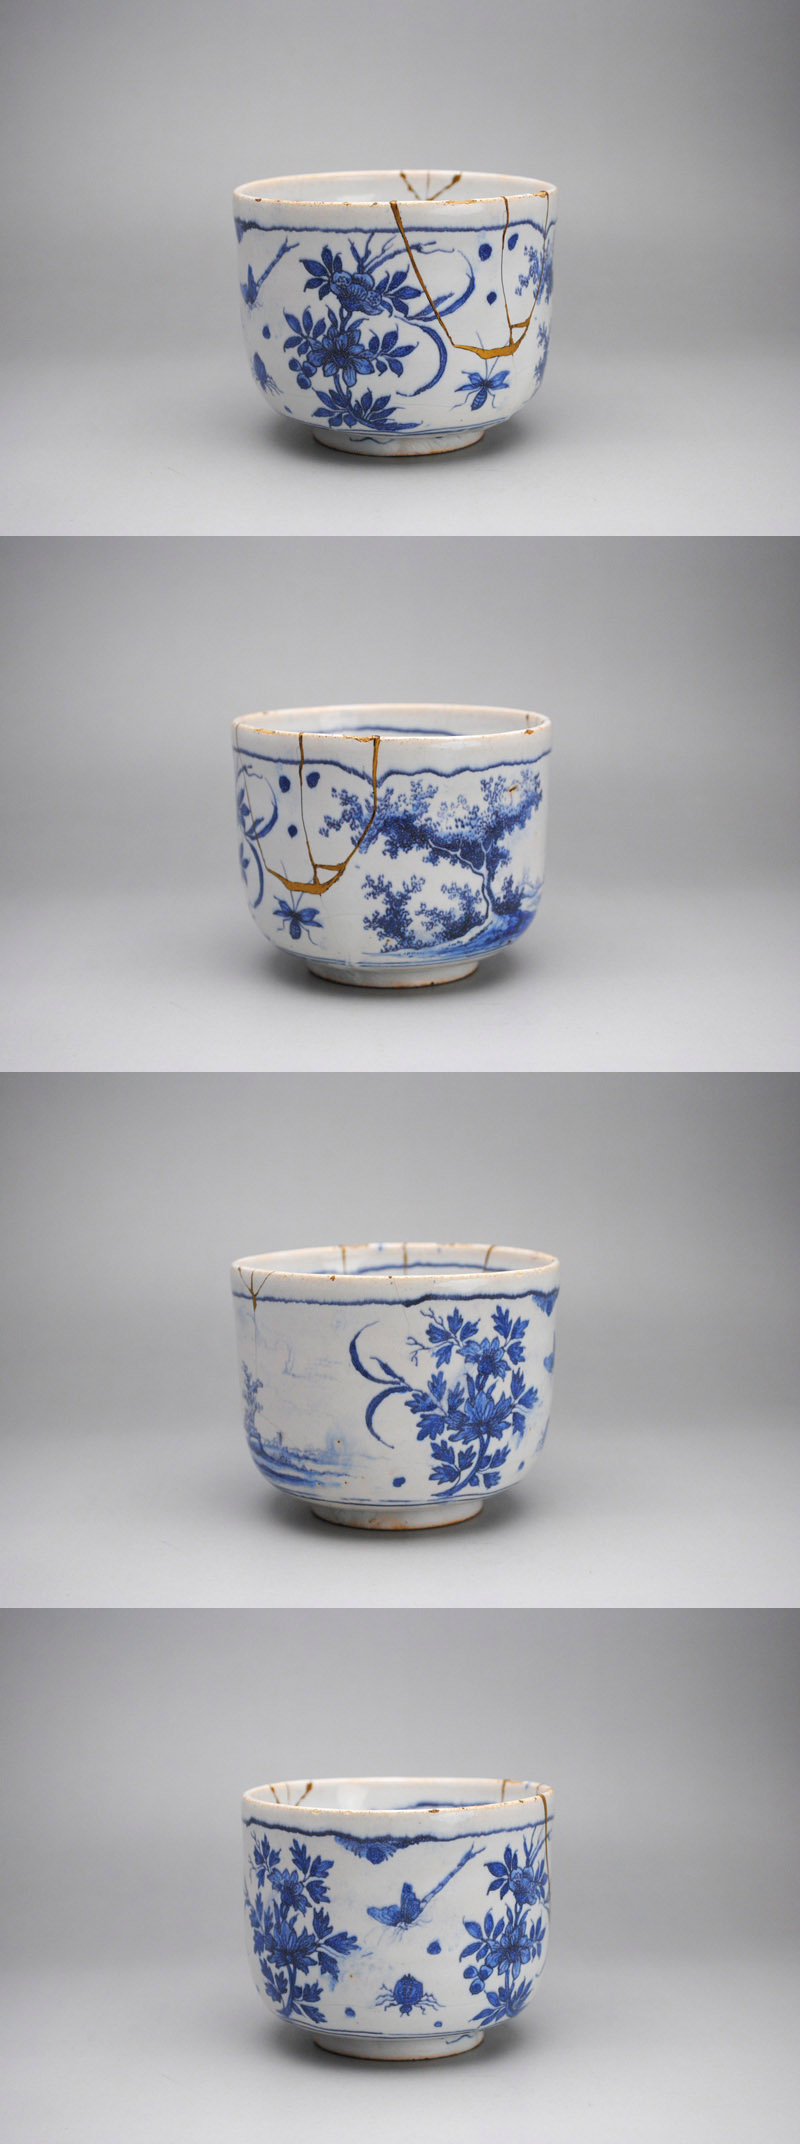 中上 ///NAKAGAMI - 阿蘭陀 藍絵花虫文茶碗 | 古美術品専門サイト 